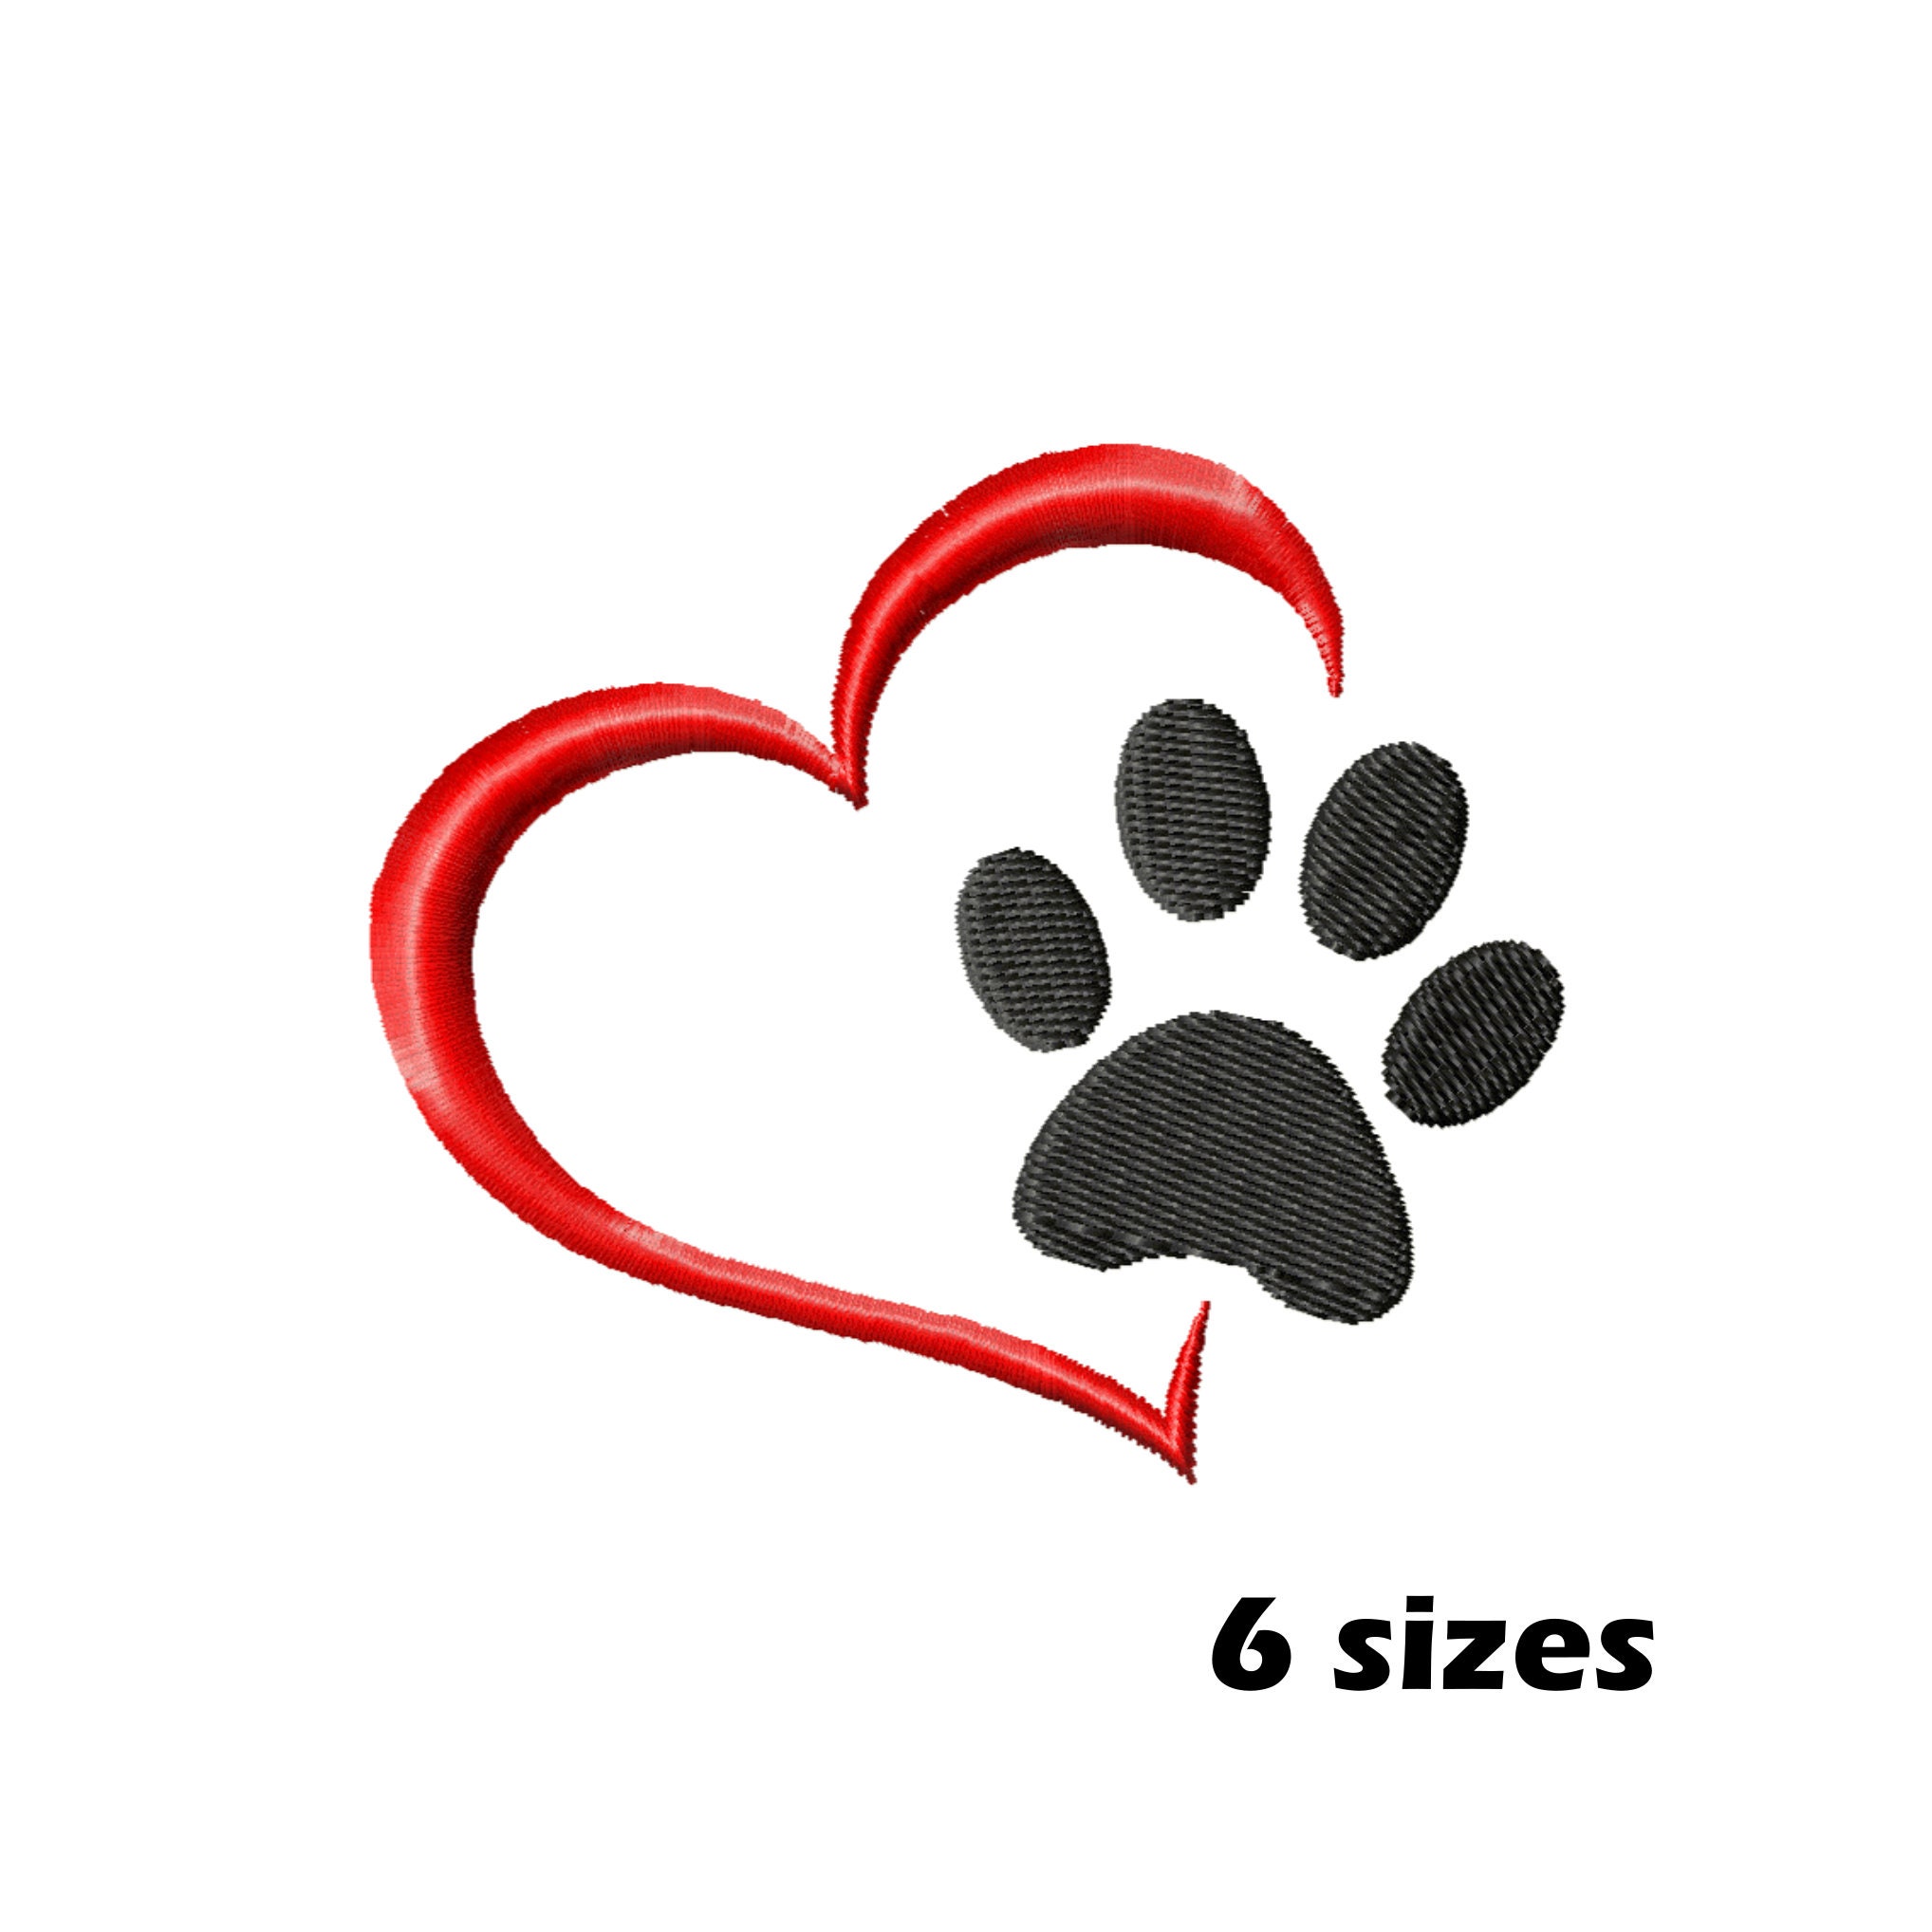 PetDesignz Paw Print Heart with Love Graphic Hoodie Sweatshirt